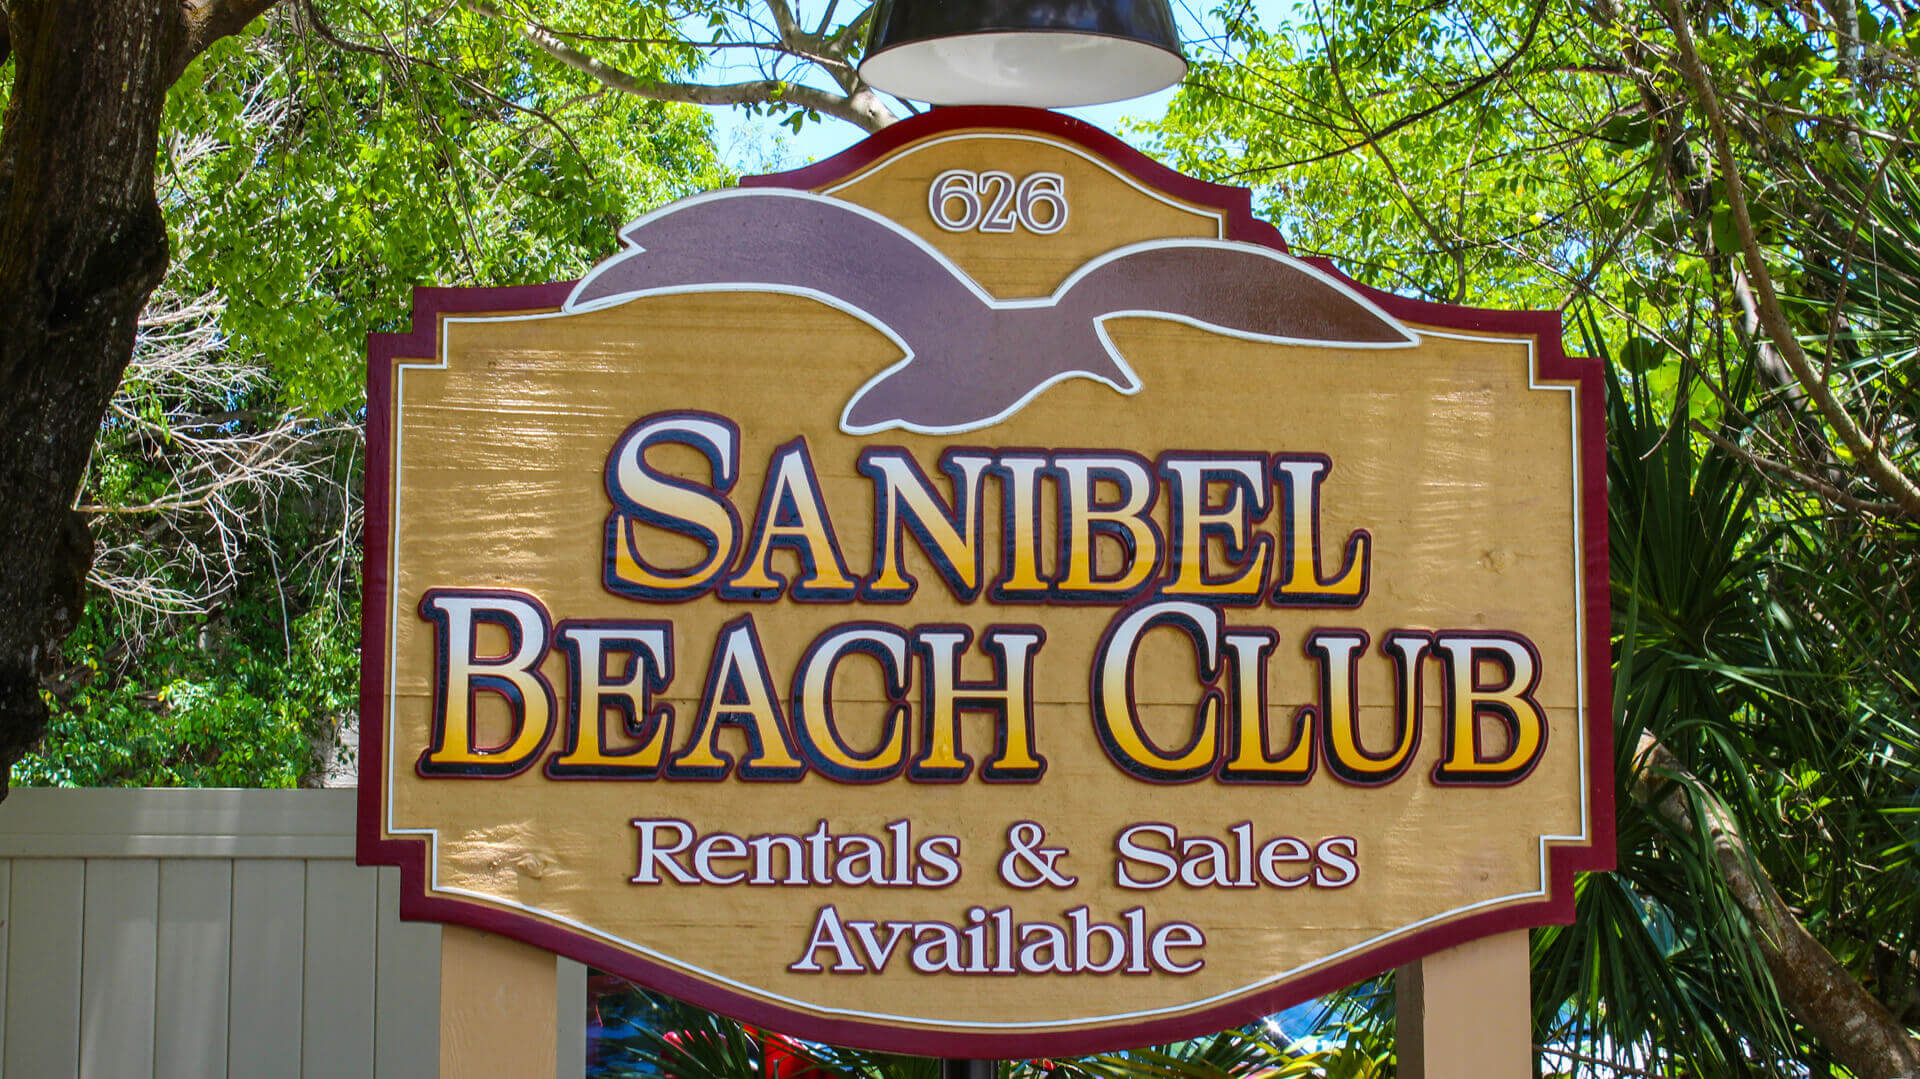 The resort signage at VRI's Sanibel Beach Club in Sanibel Island, Florida.